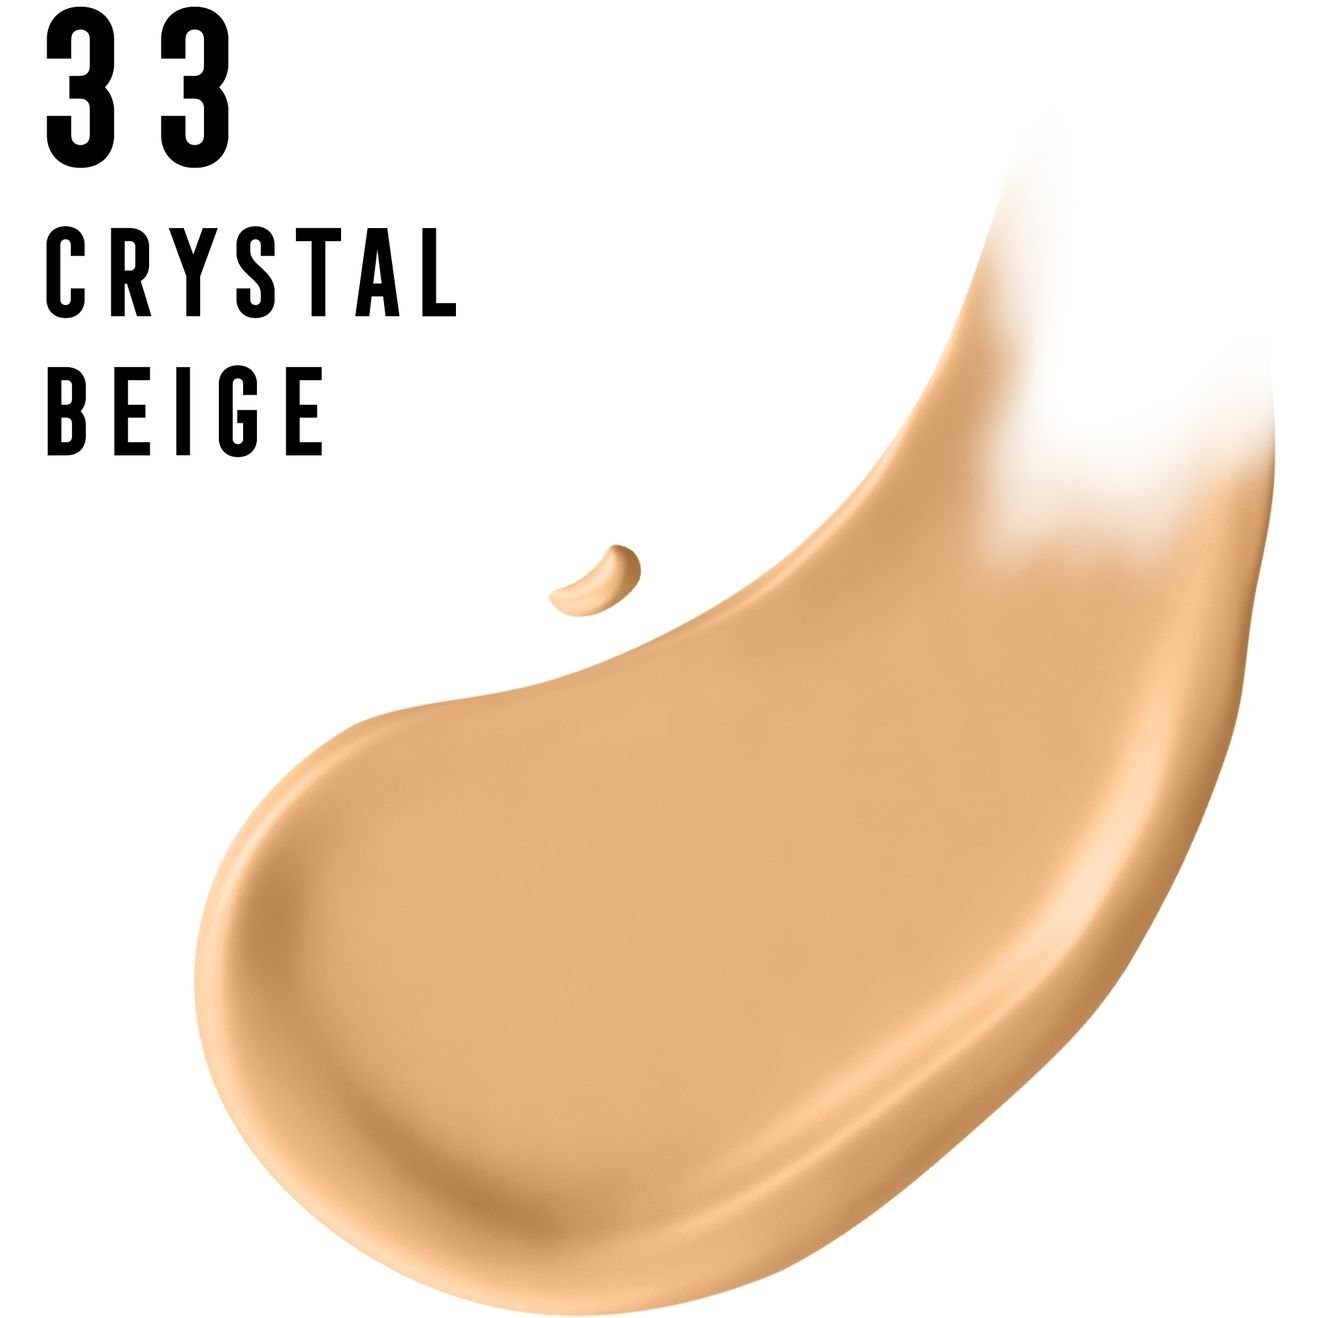 Тональная основа Max Factor Miracle Pure Skin-Improving Foundation SPF30 тон 033 (Crystal Beige) 30 мл - фото 3